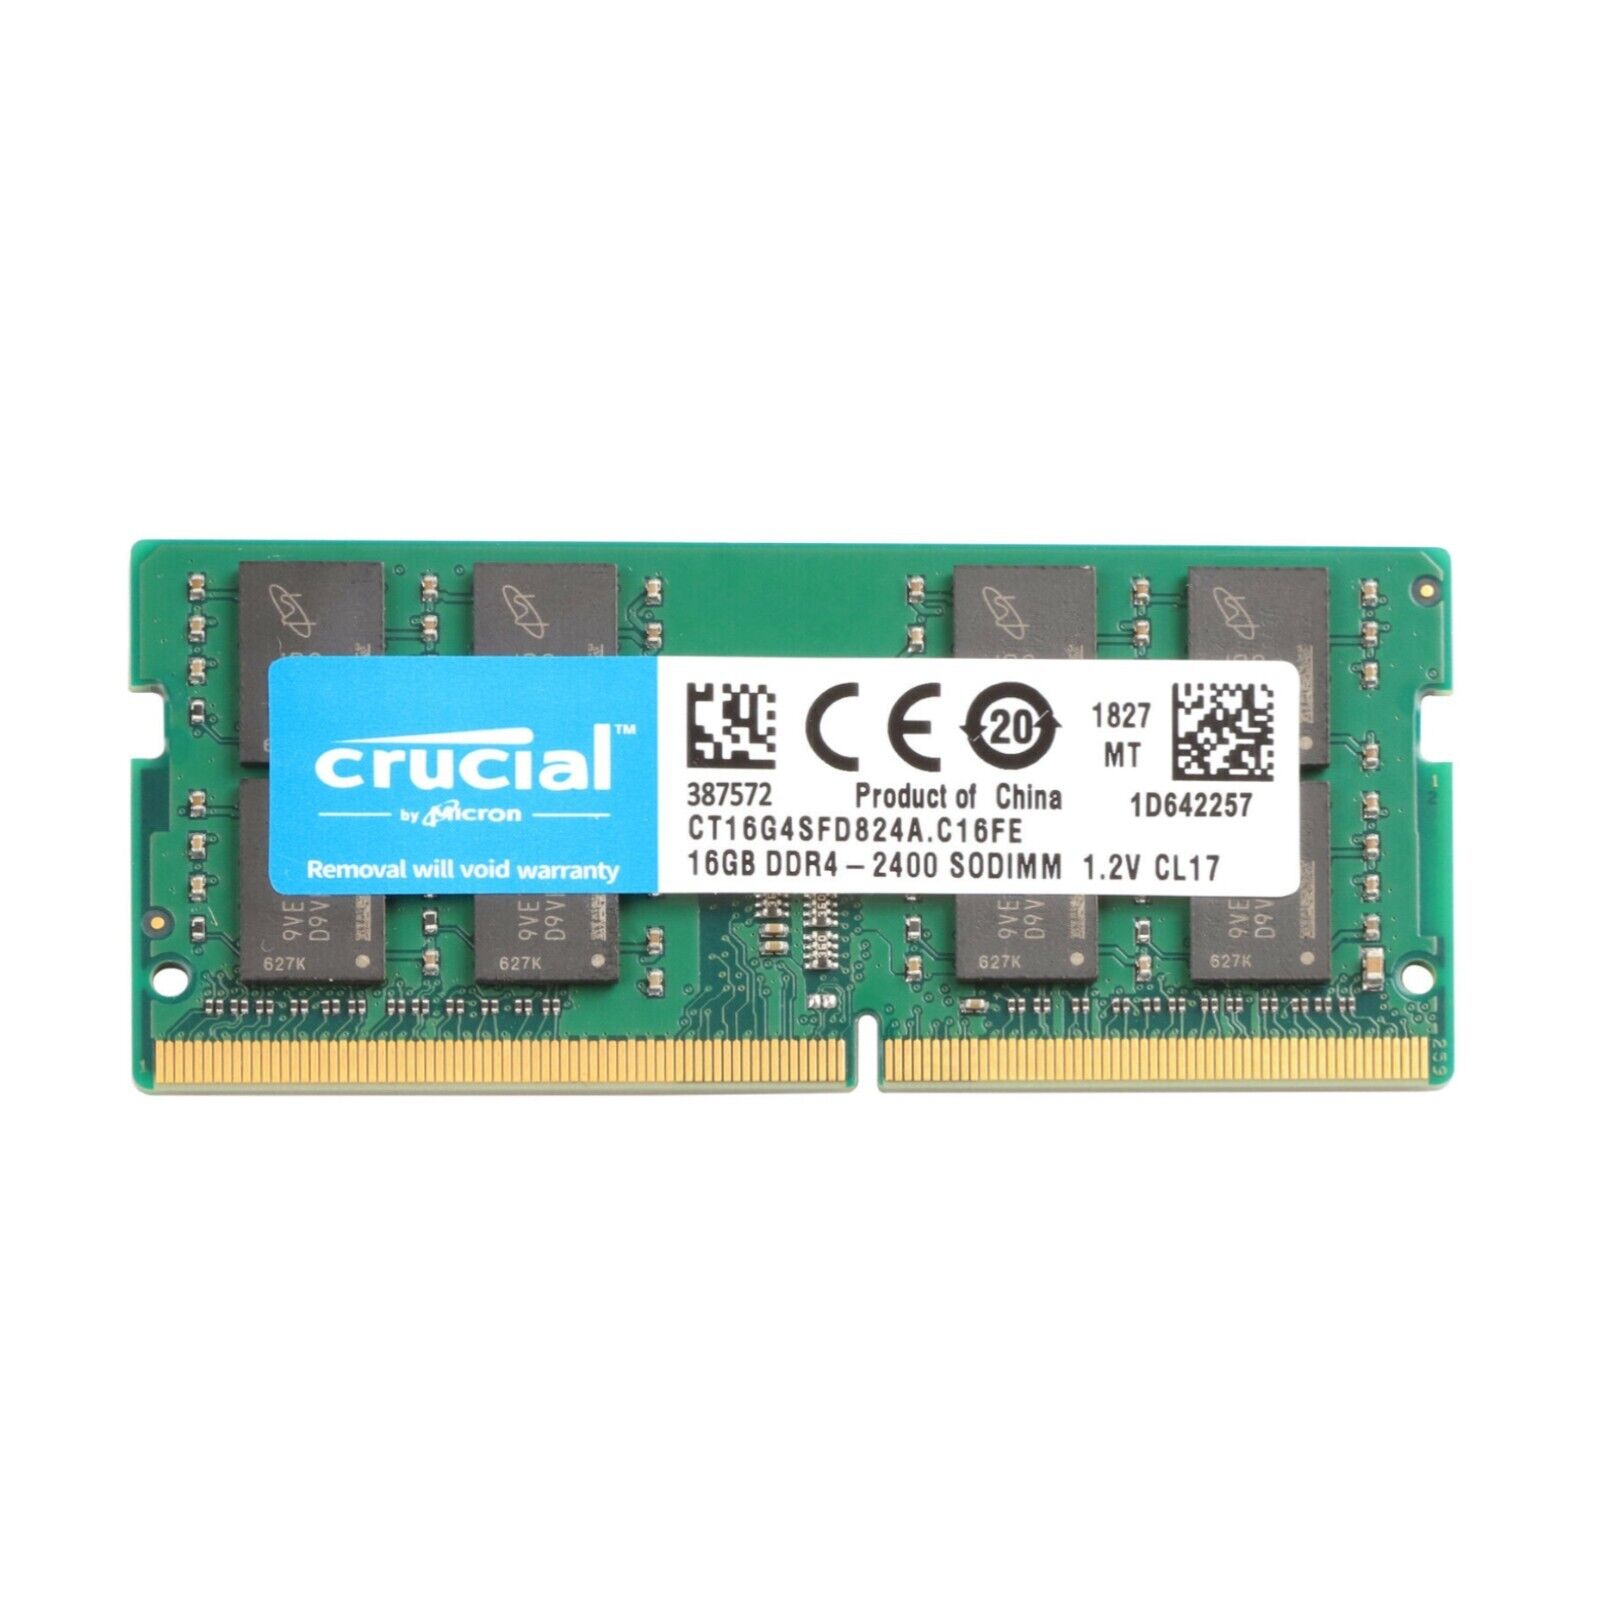 50pcs / Lot Crucial 16GB DDR4 2400MHz PC4-19200 SODIMM Memory Ram CT16G4SFD824A